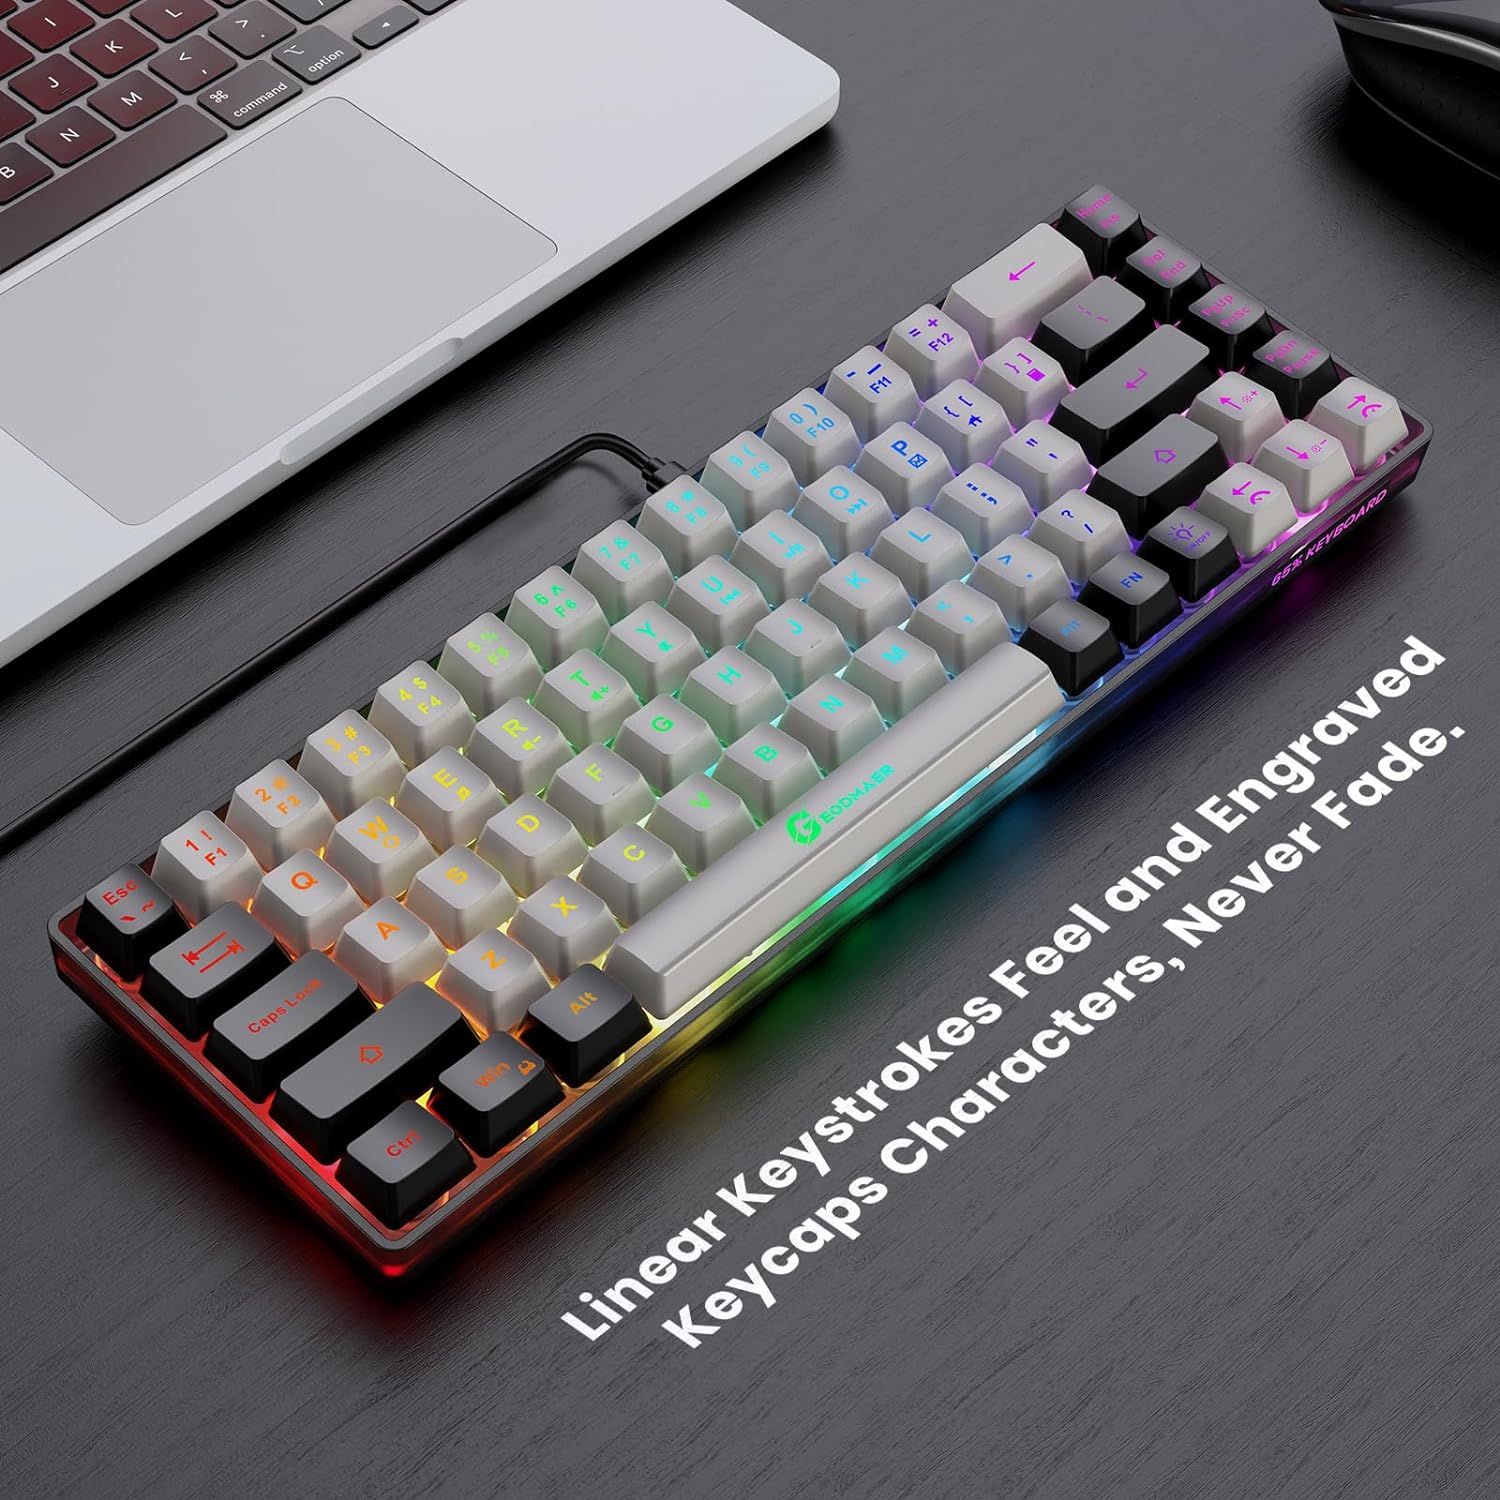 Geodmaer 65% Wired Backlit Gaming Keyboard